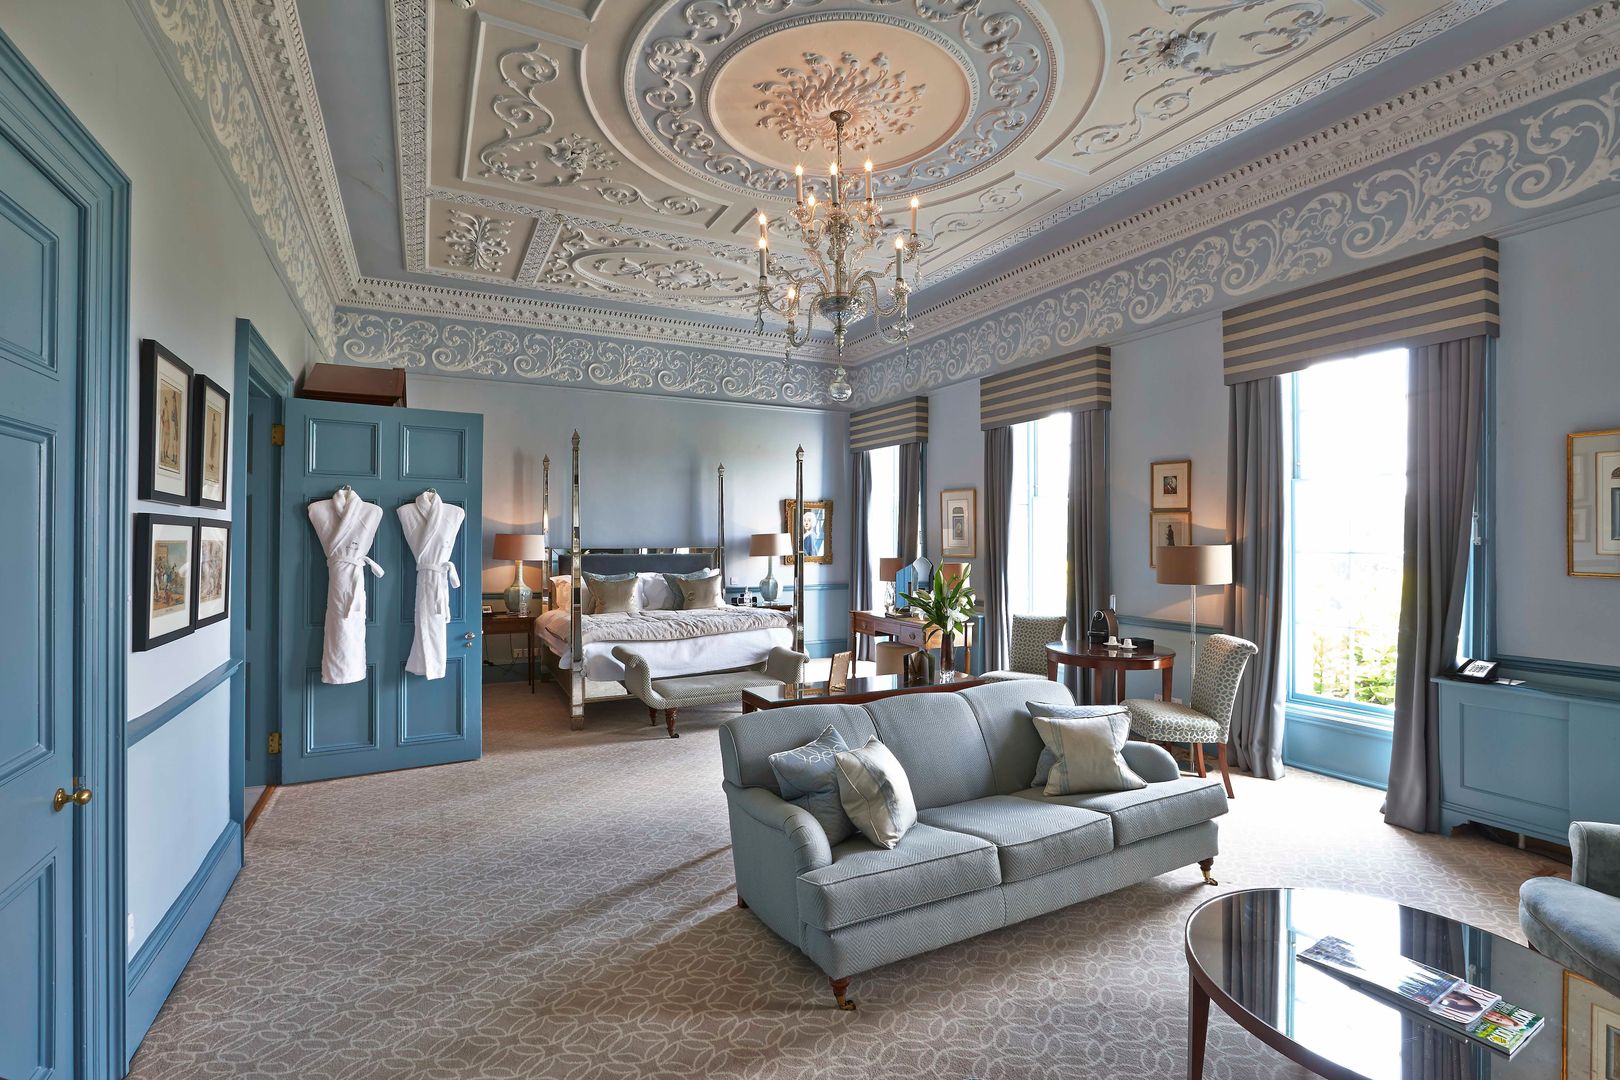 Royal Crescent Hotel, Bath, Wiltshire, England, UK Adam Coupe Photography Limited Комерційні приміщення Готелі